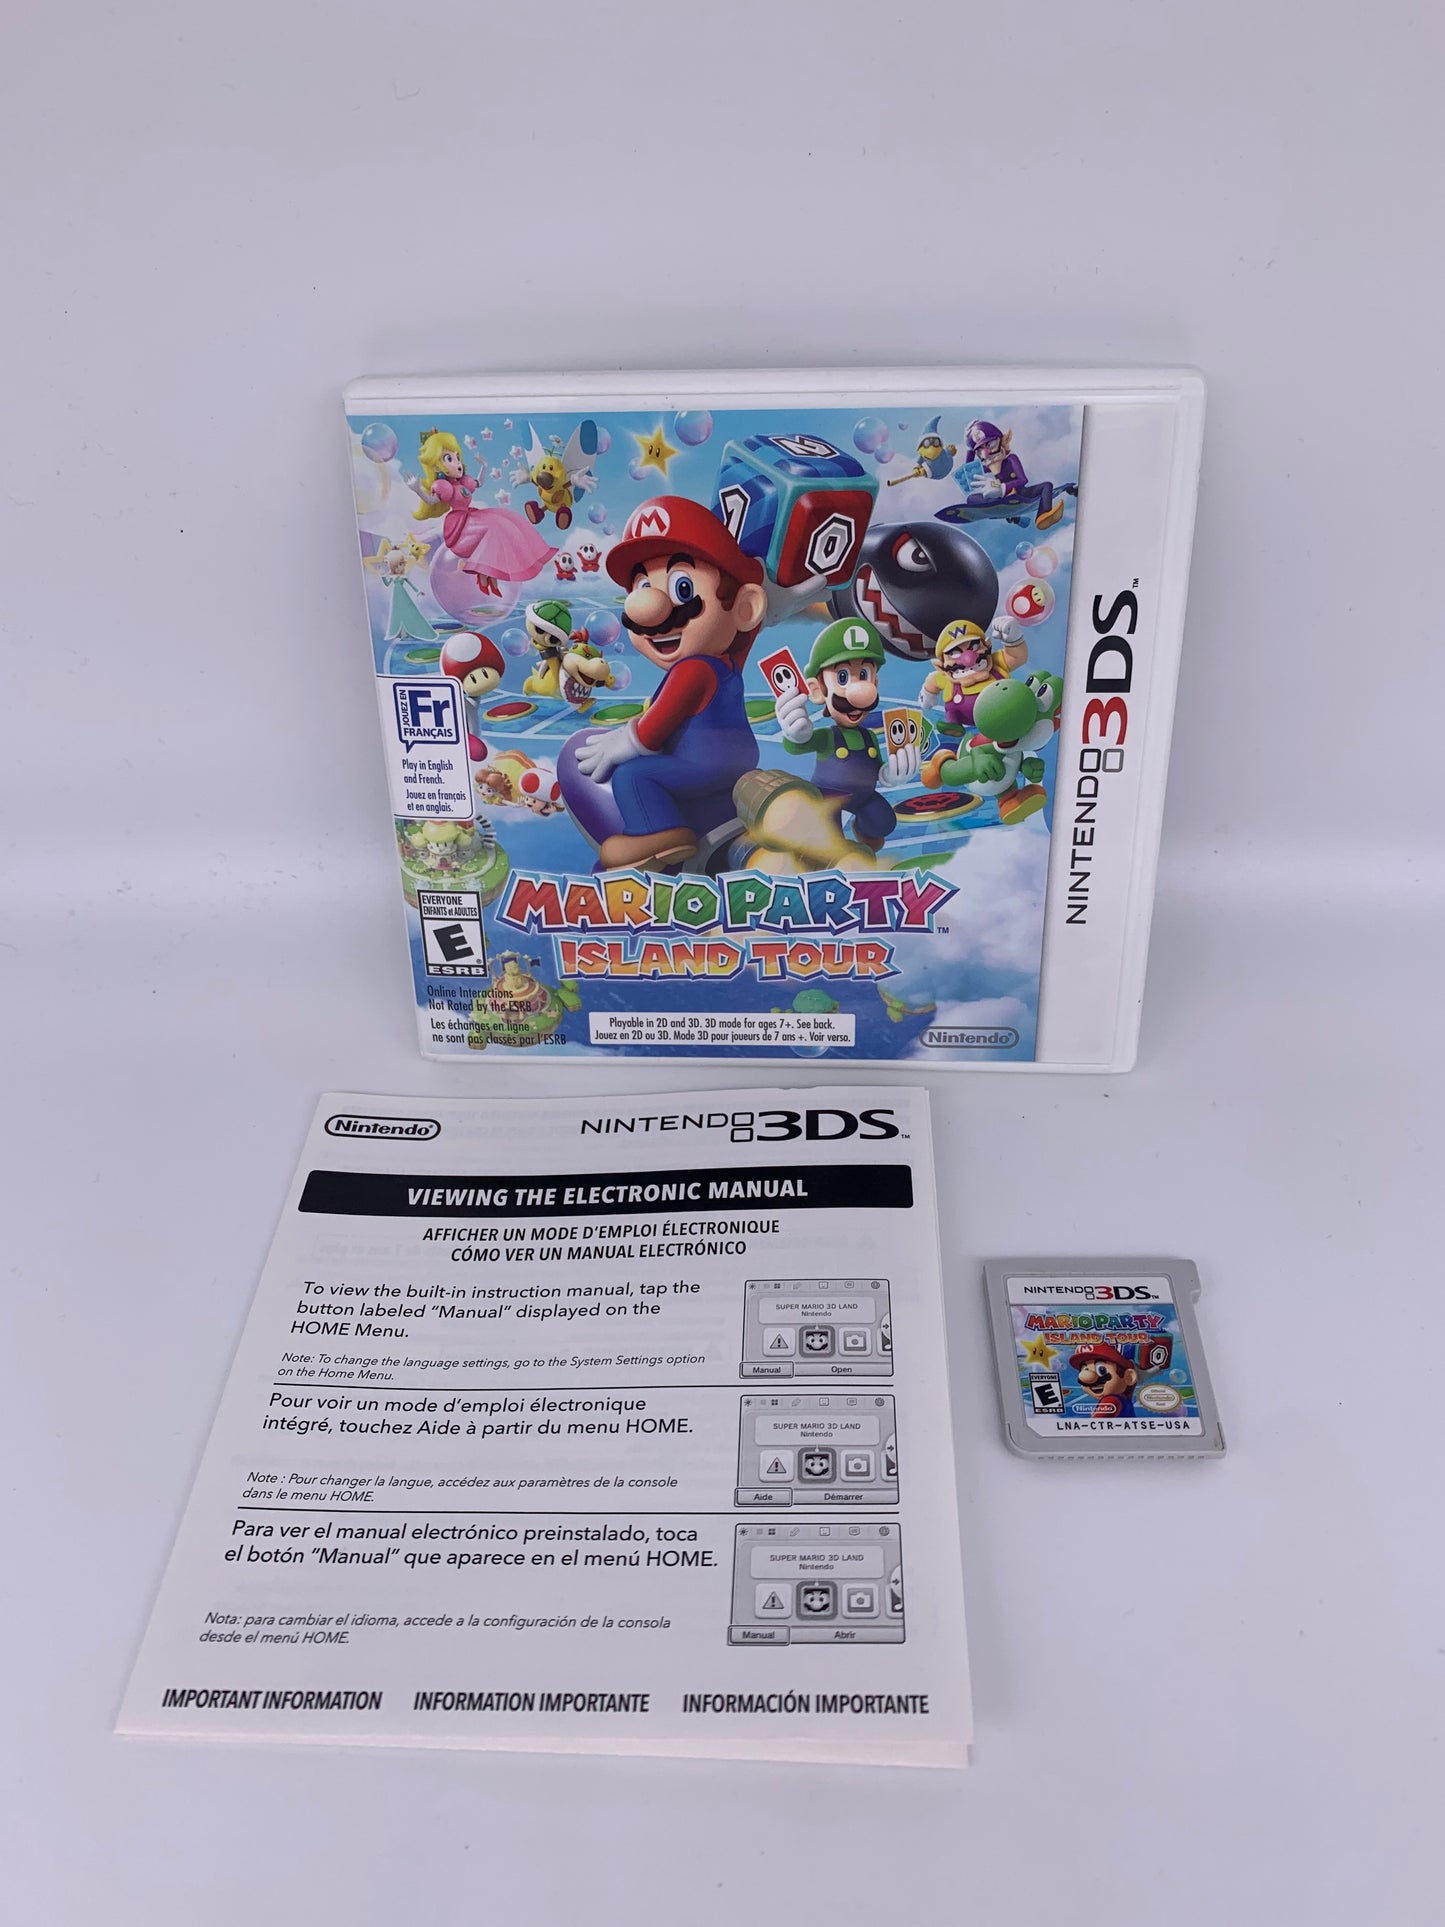 PiXEL-RETRO.COM : NINTENDO 3DS (3DS) COMPLETE CIB BOX MANUAL GAME NTSC MARIO PARTY ISLAND TOUR